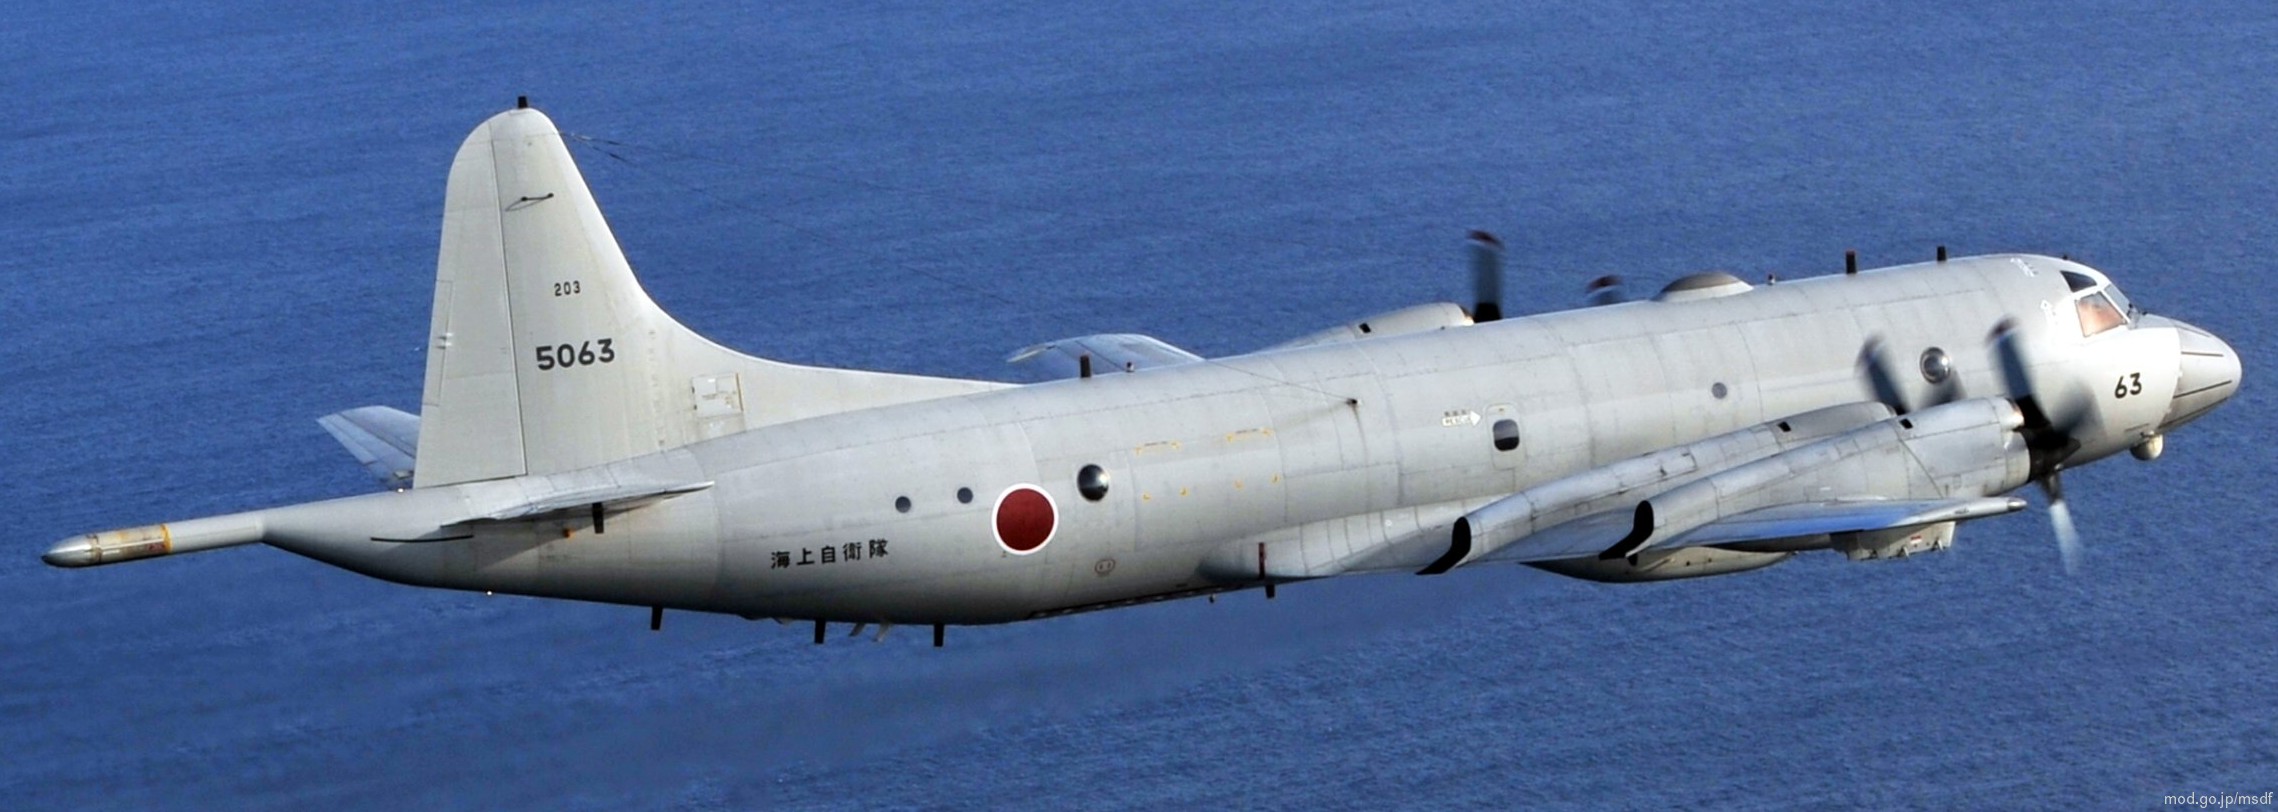 kawasaki p-3c orion patrol aircraft mpa japan maritime self defense force jmsdf 5063 05